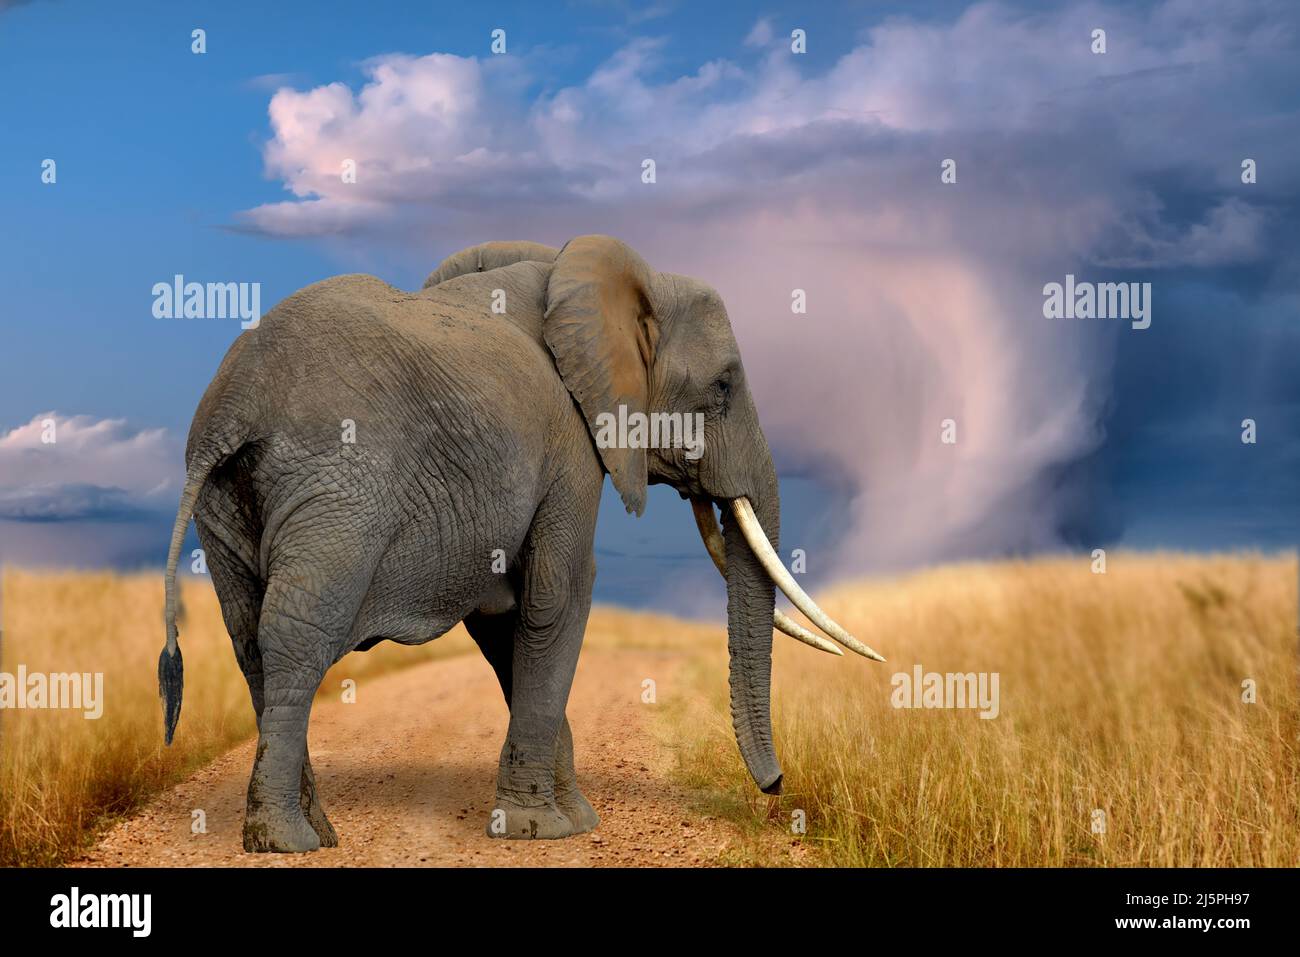 Adult elephants walk on the savannah under the stormy sky. National park of Kenya, Africa Stock Photo